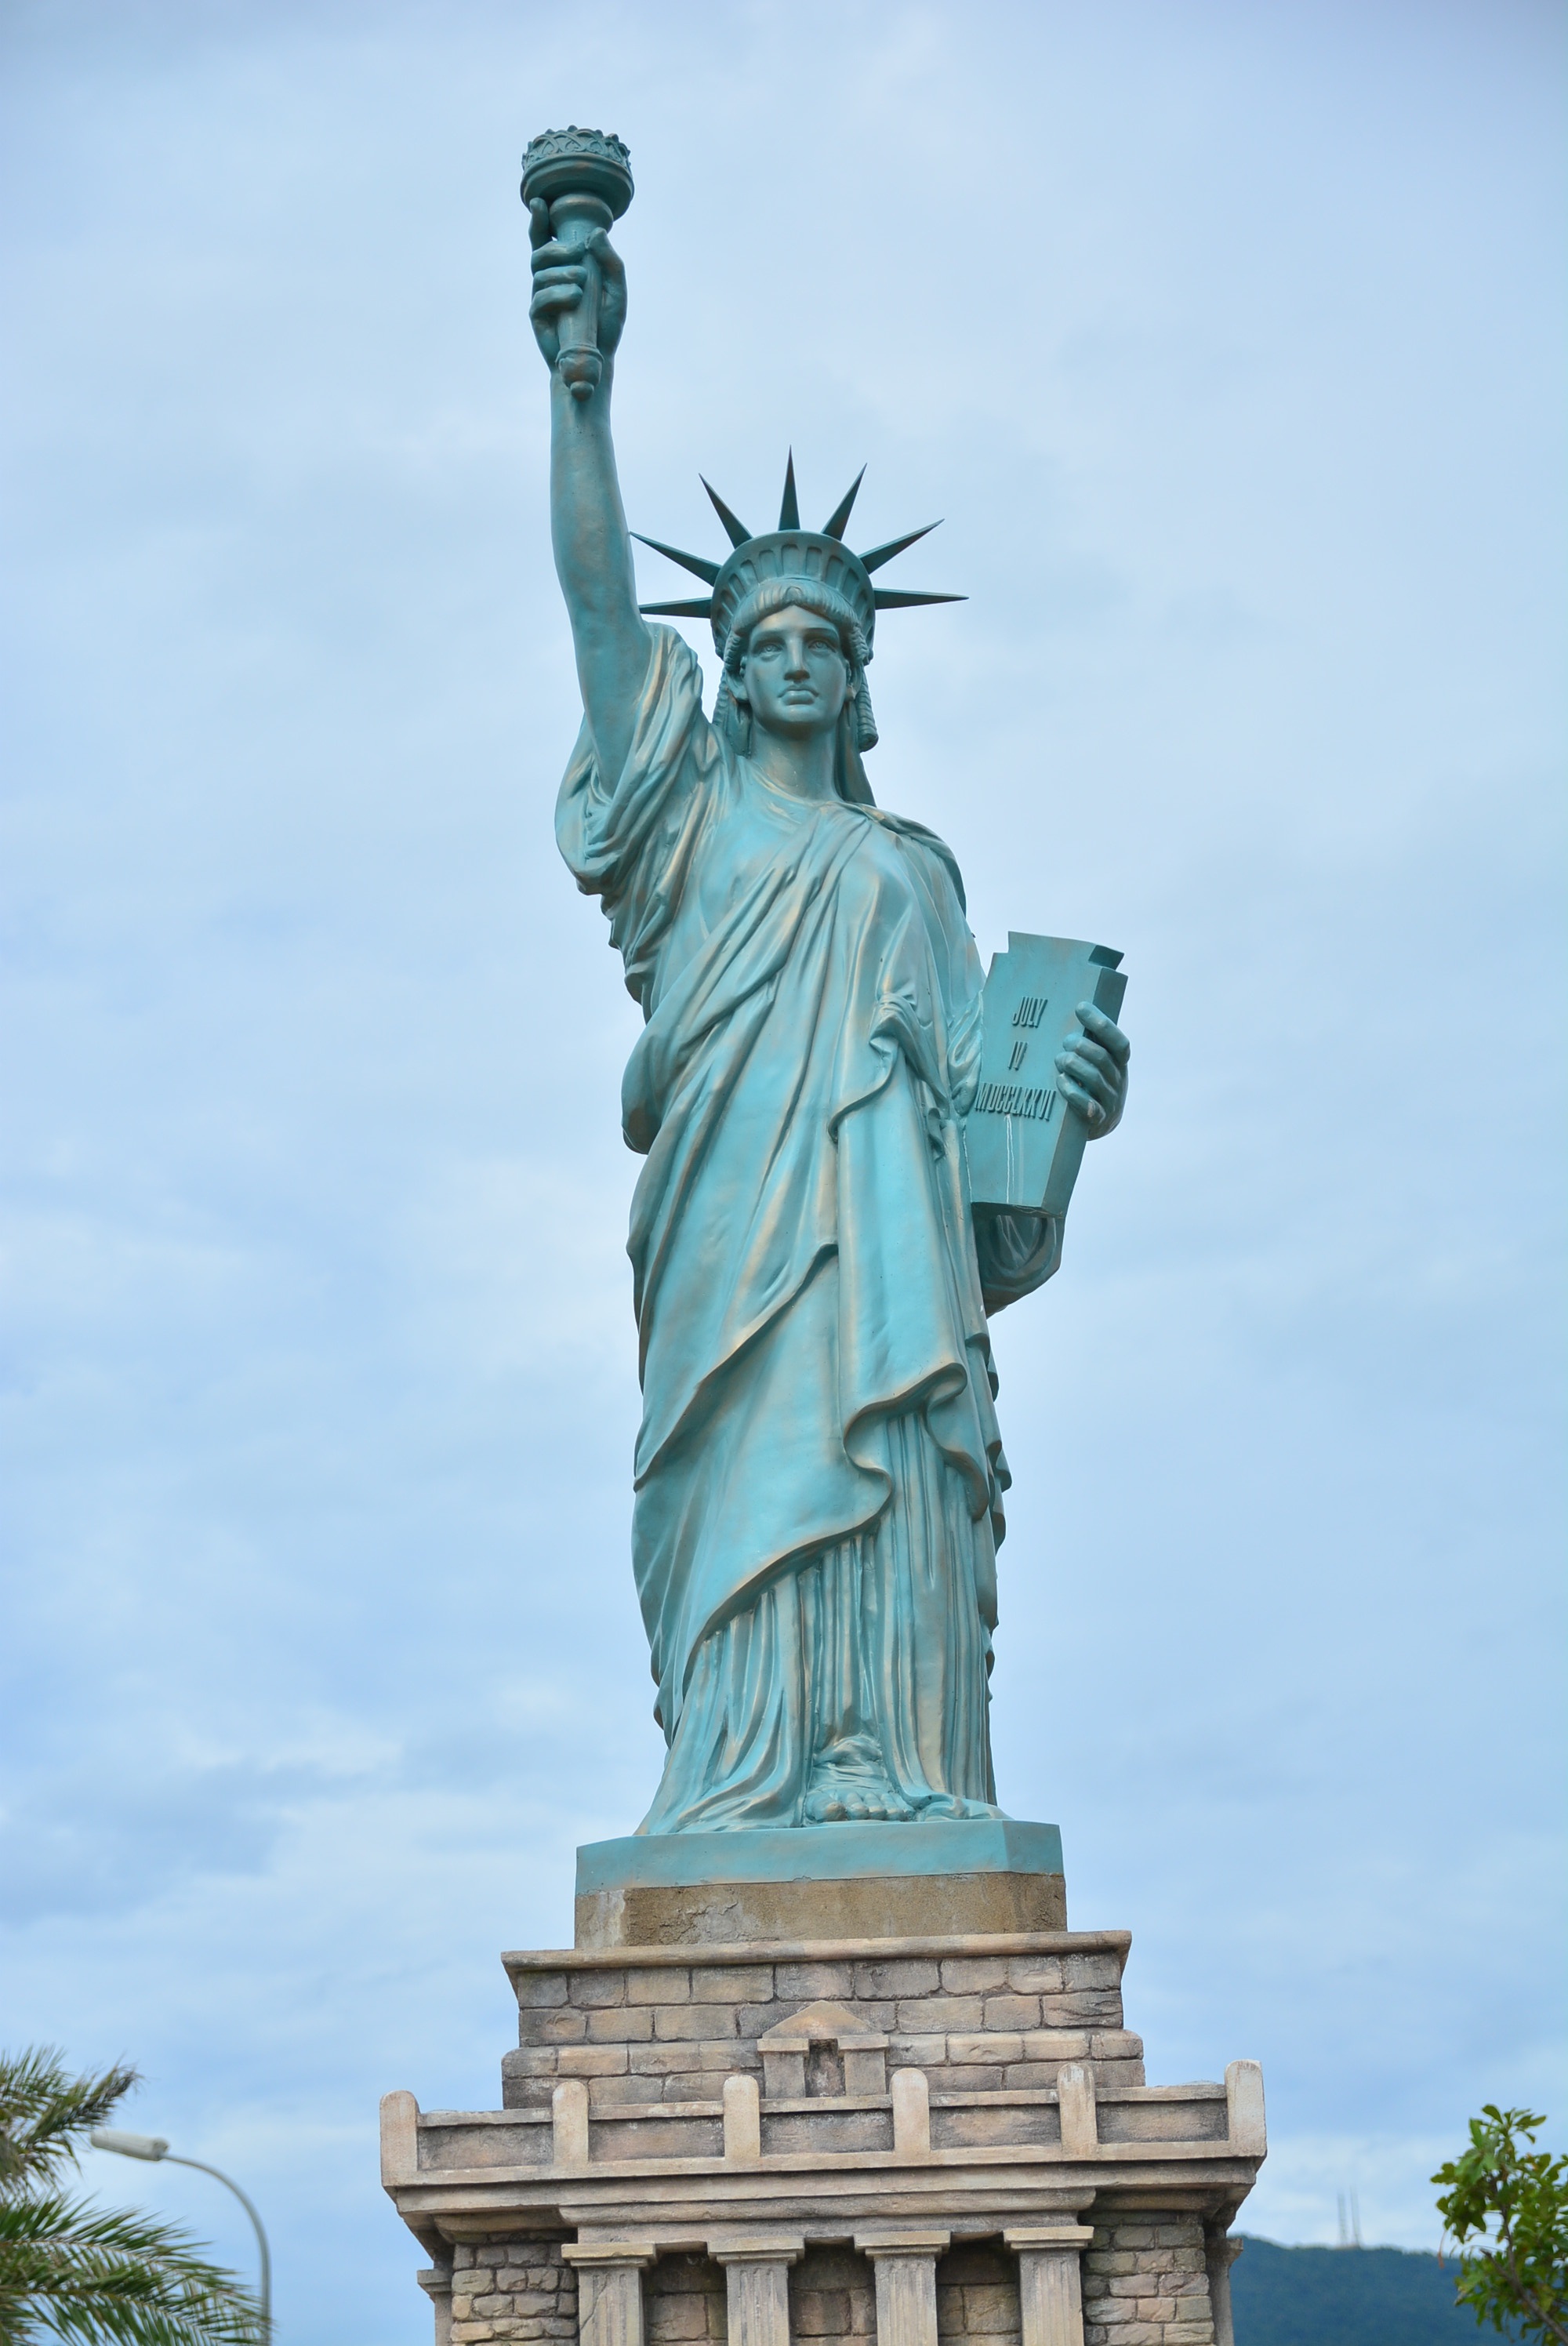 Danang World Wonders Park - Statue of Liberty